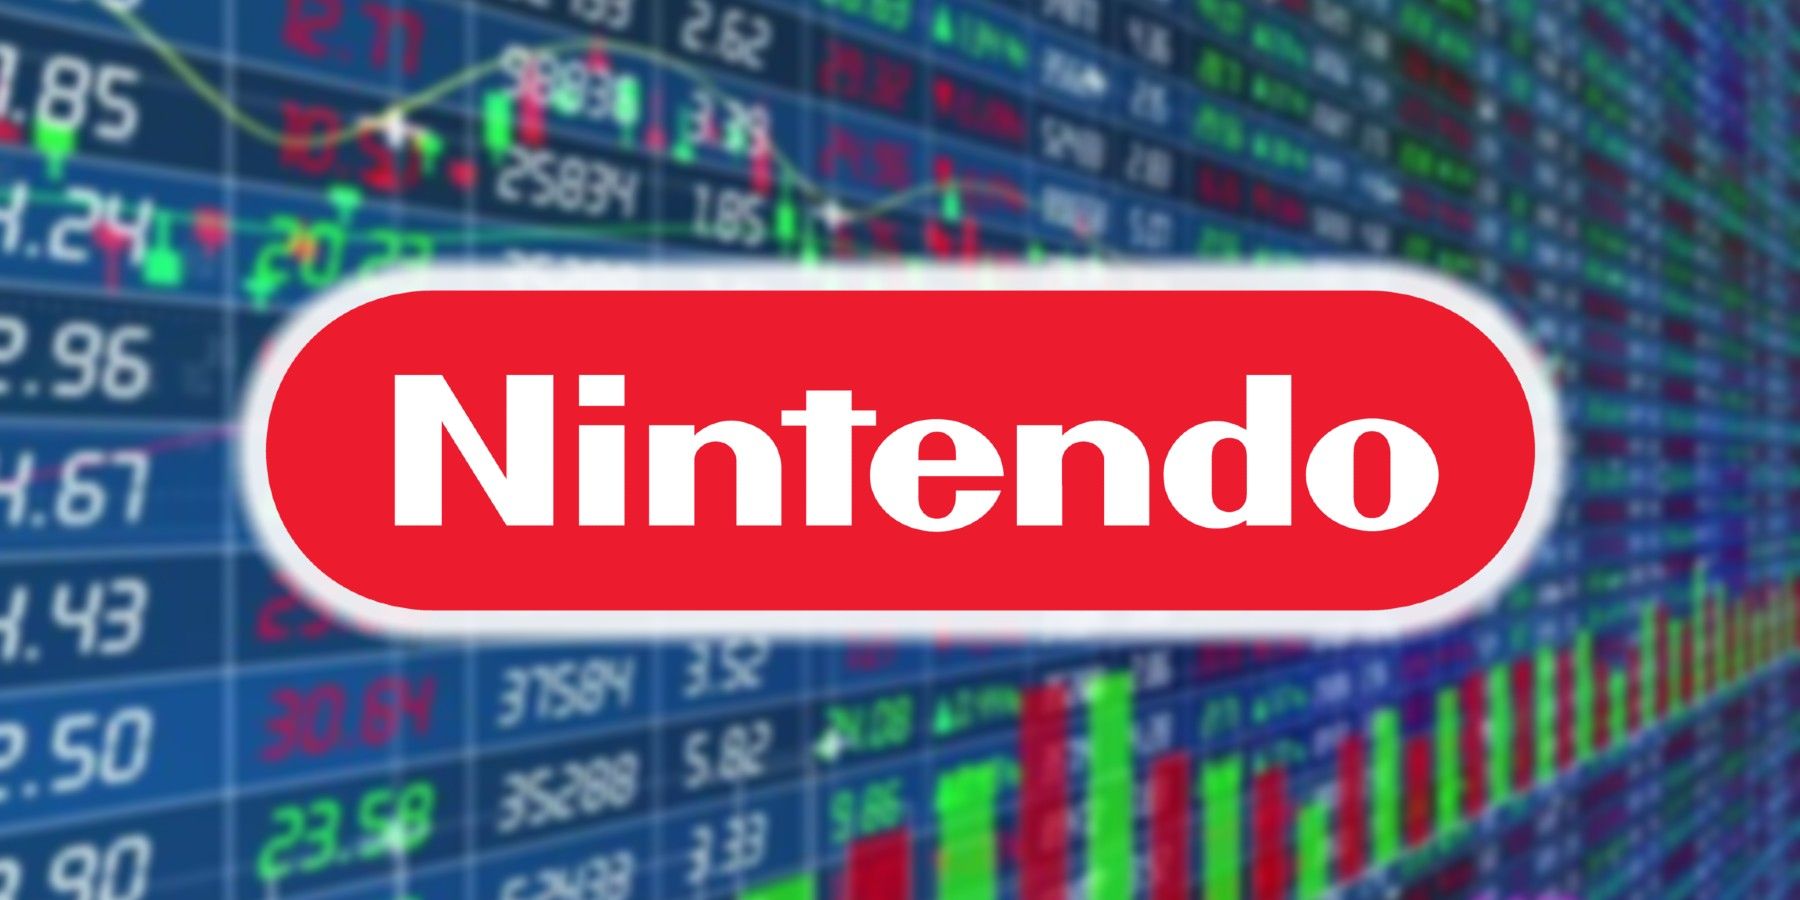 nintendo-logo-stock-index-blurred-background